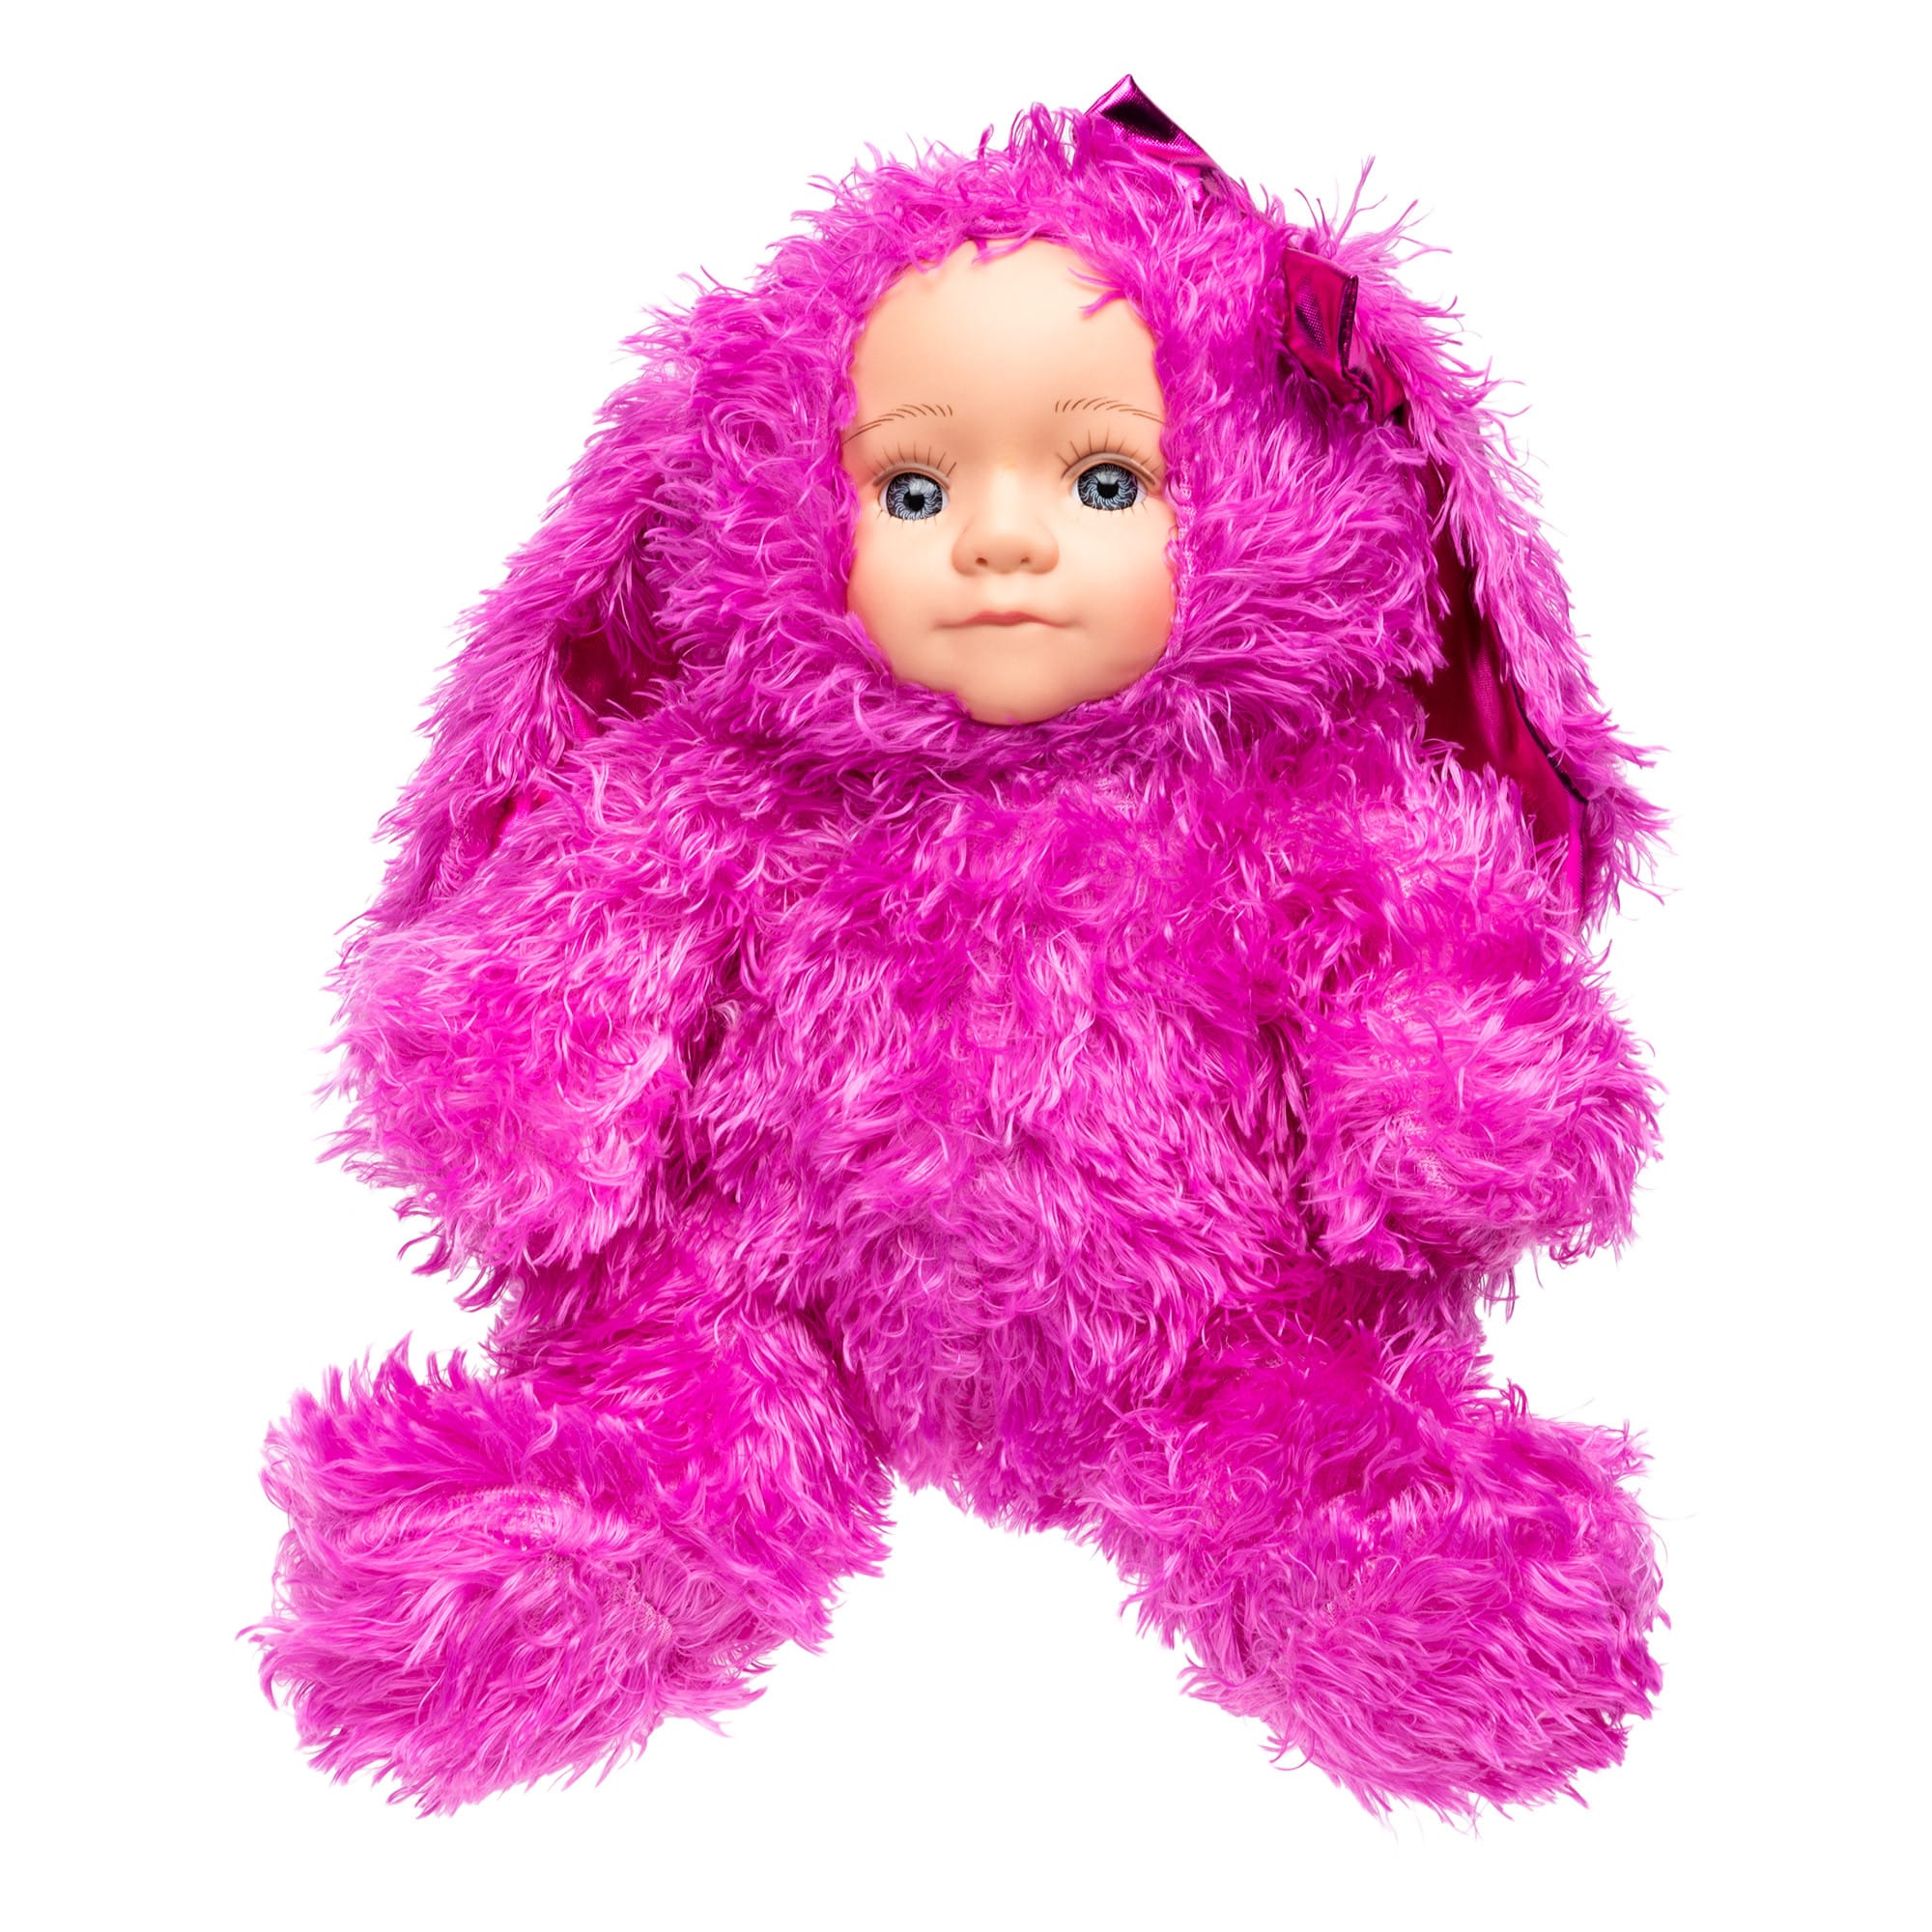 Fur Babies - 24cm Plush Doll - Doris